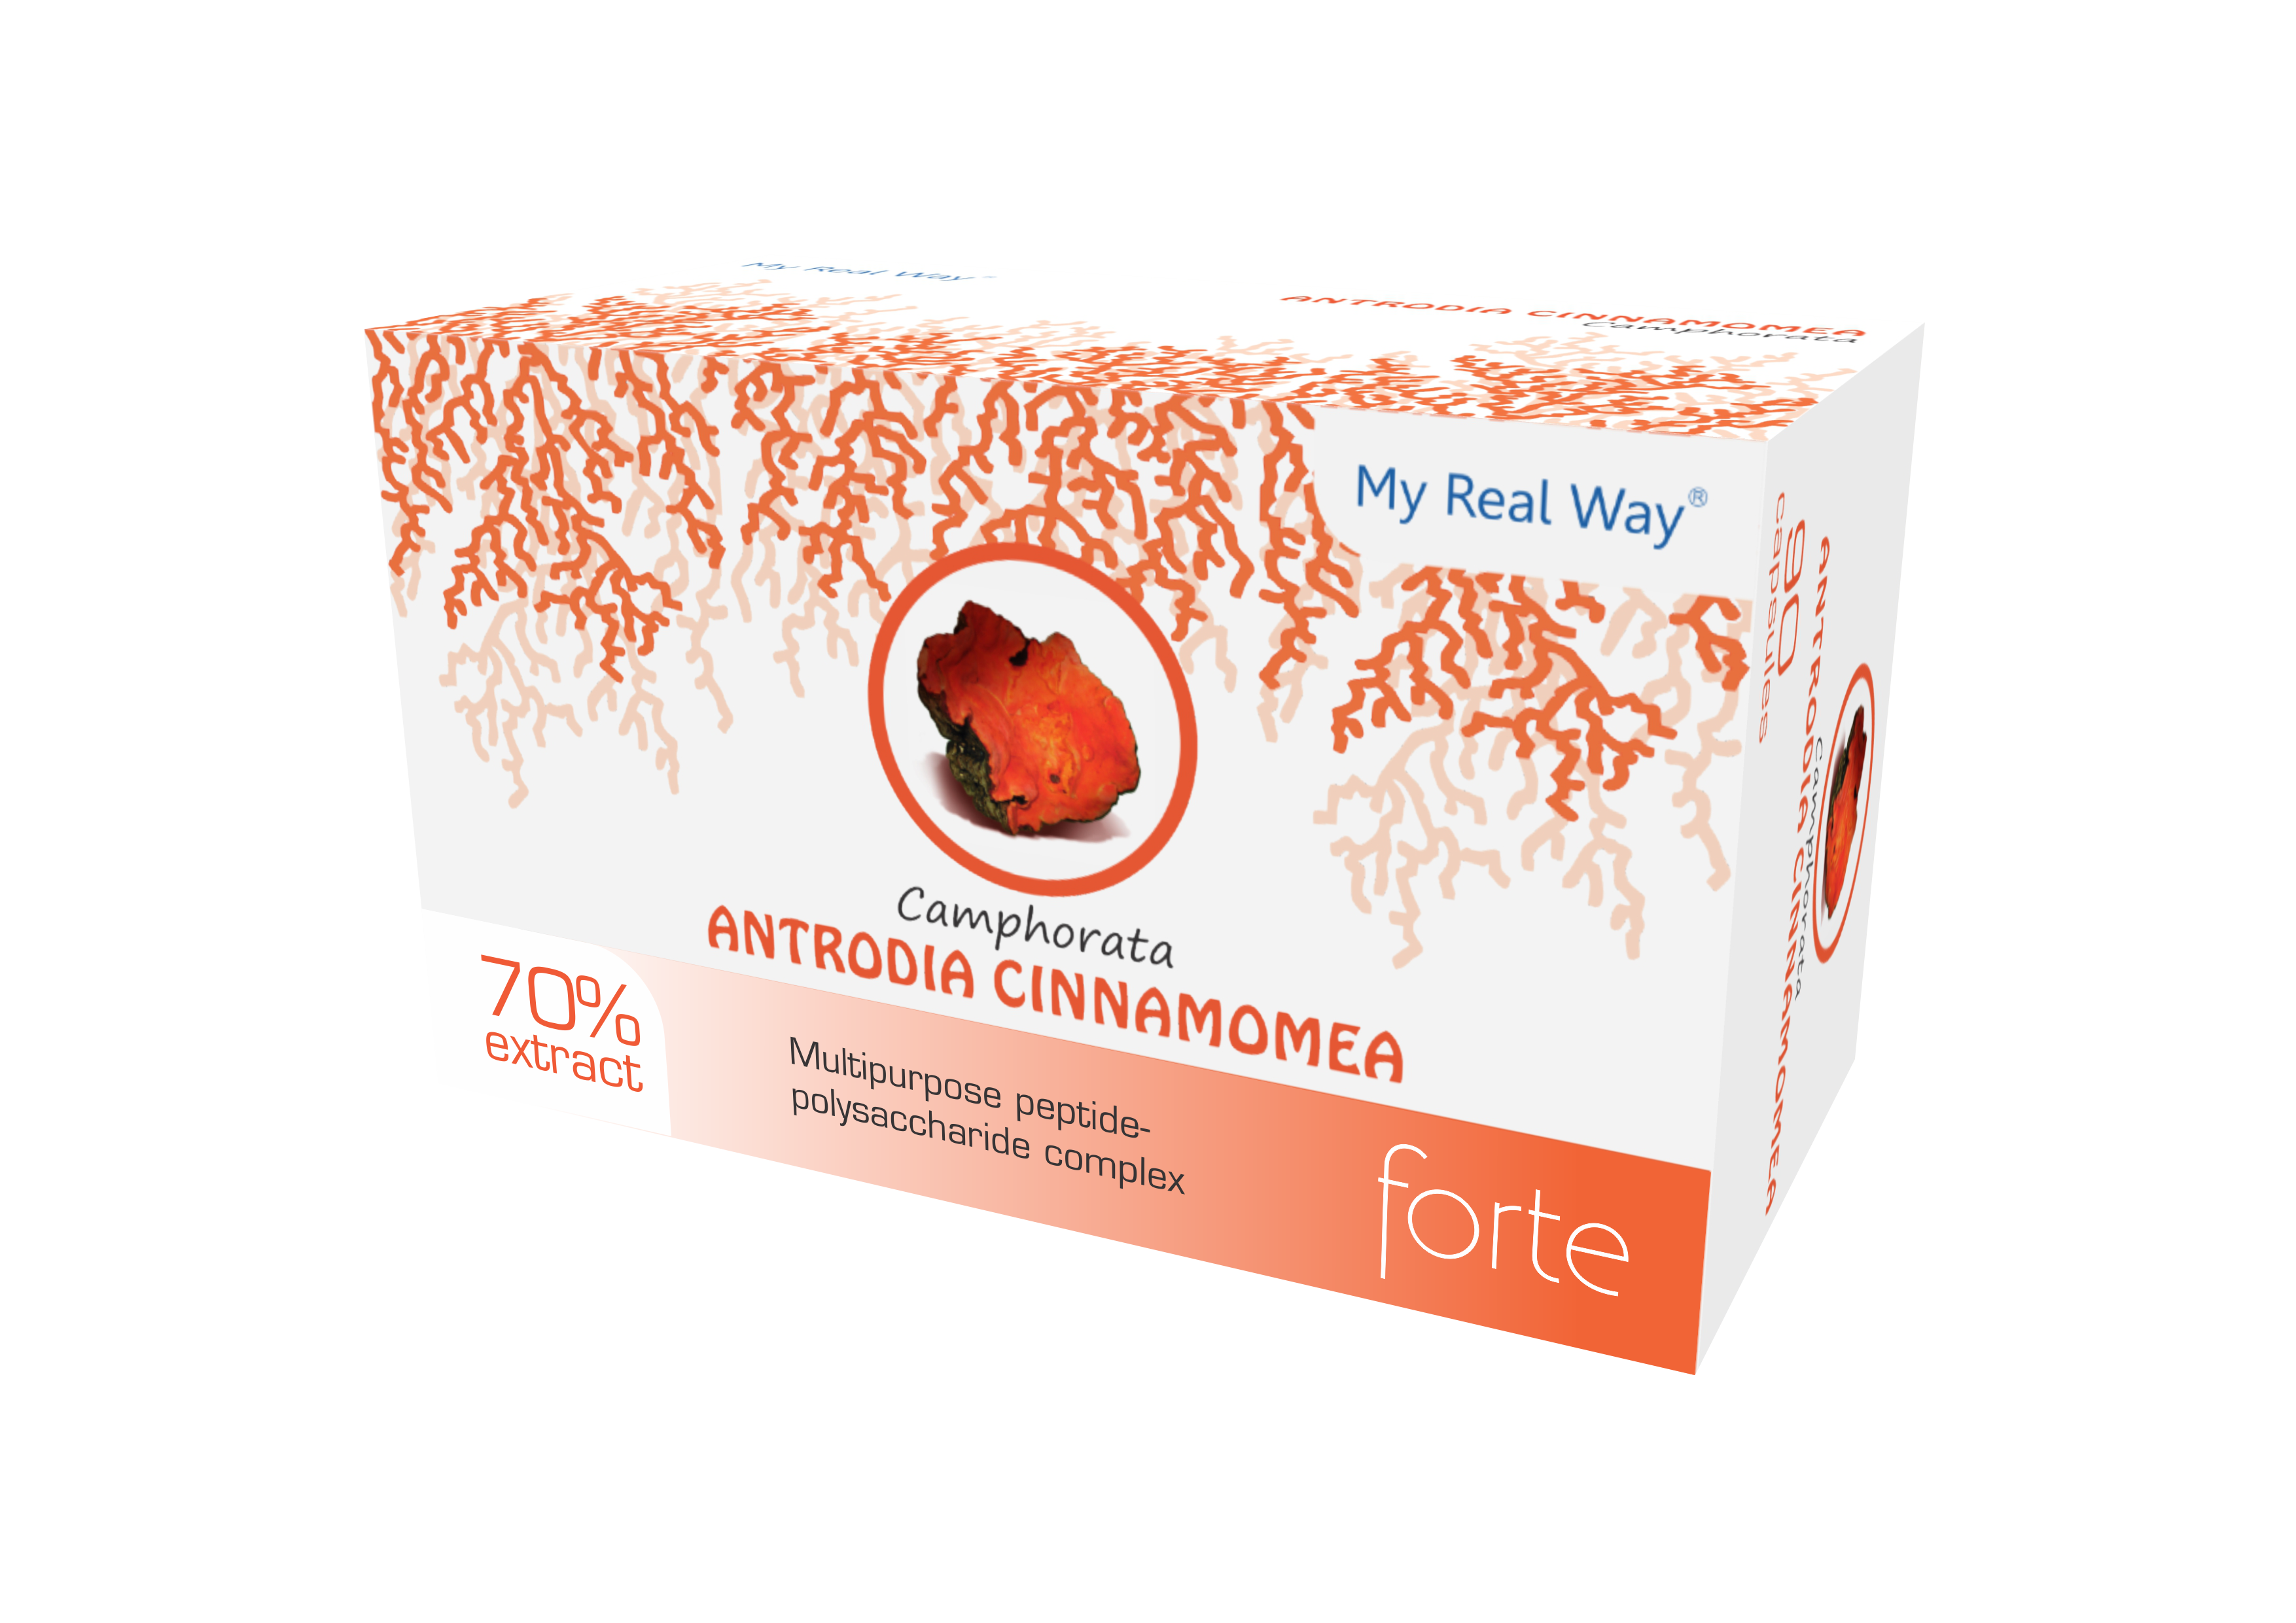 Antrodia Cinnamonea Camphorata